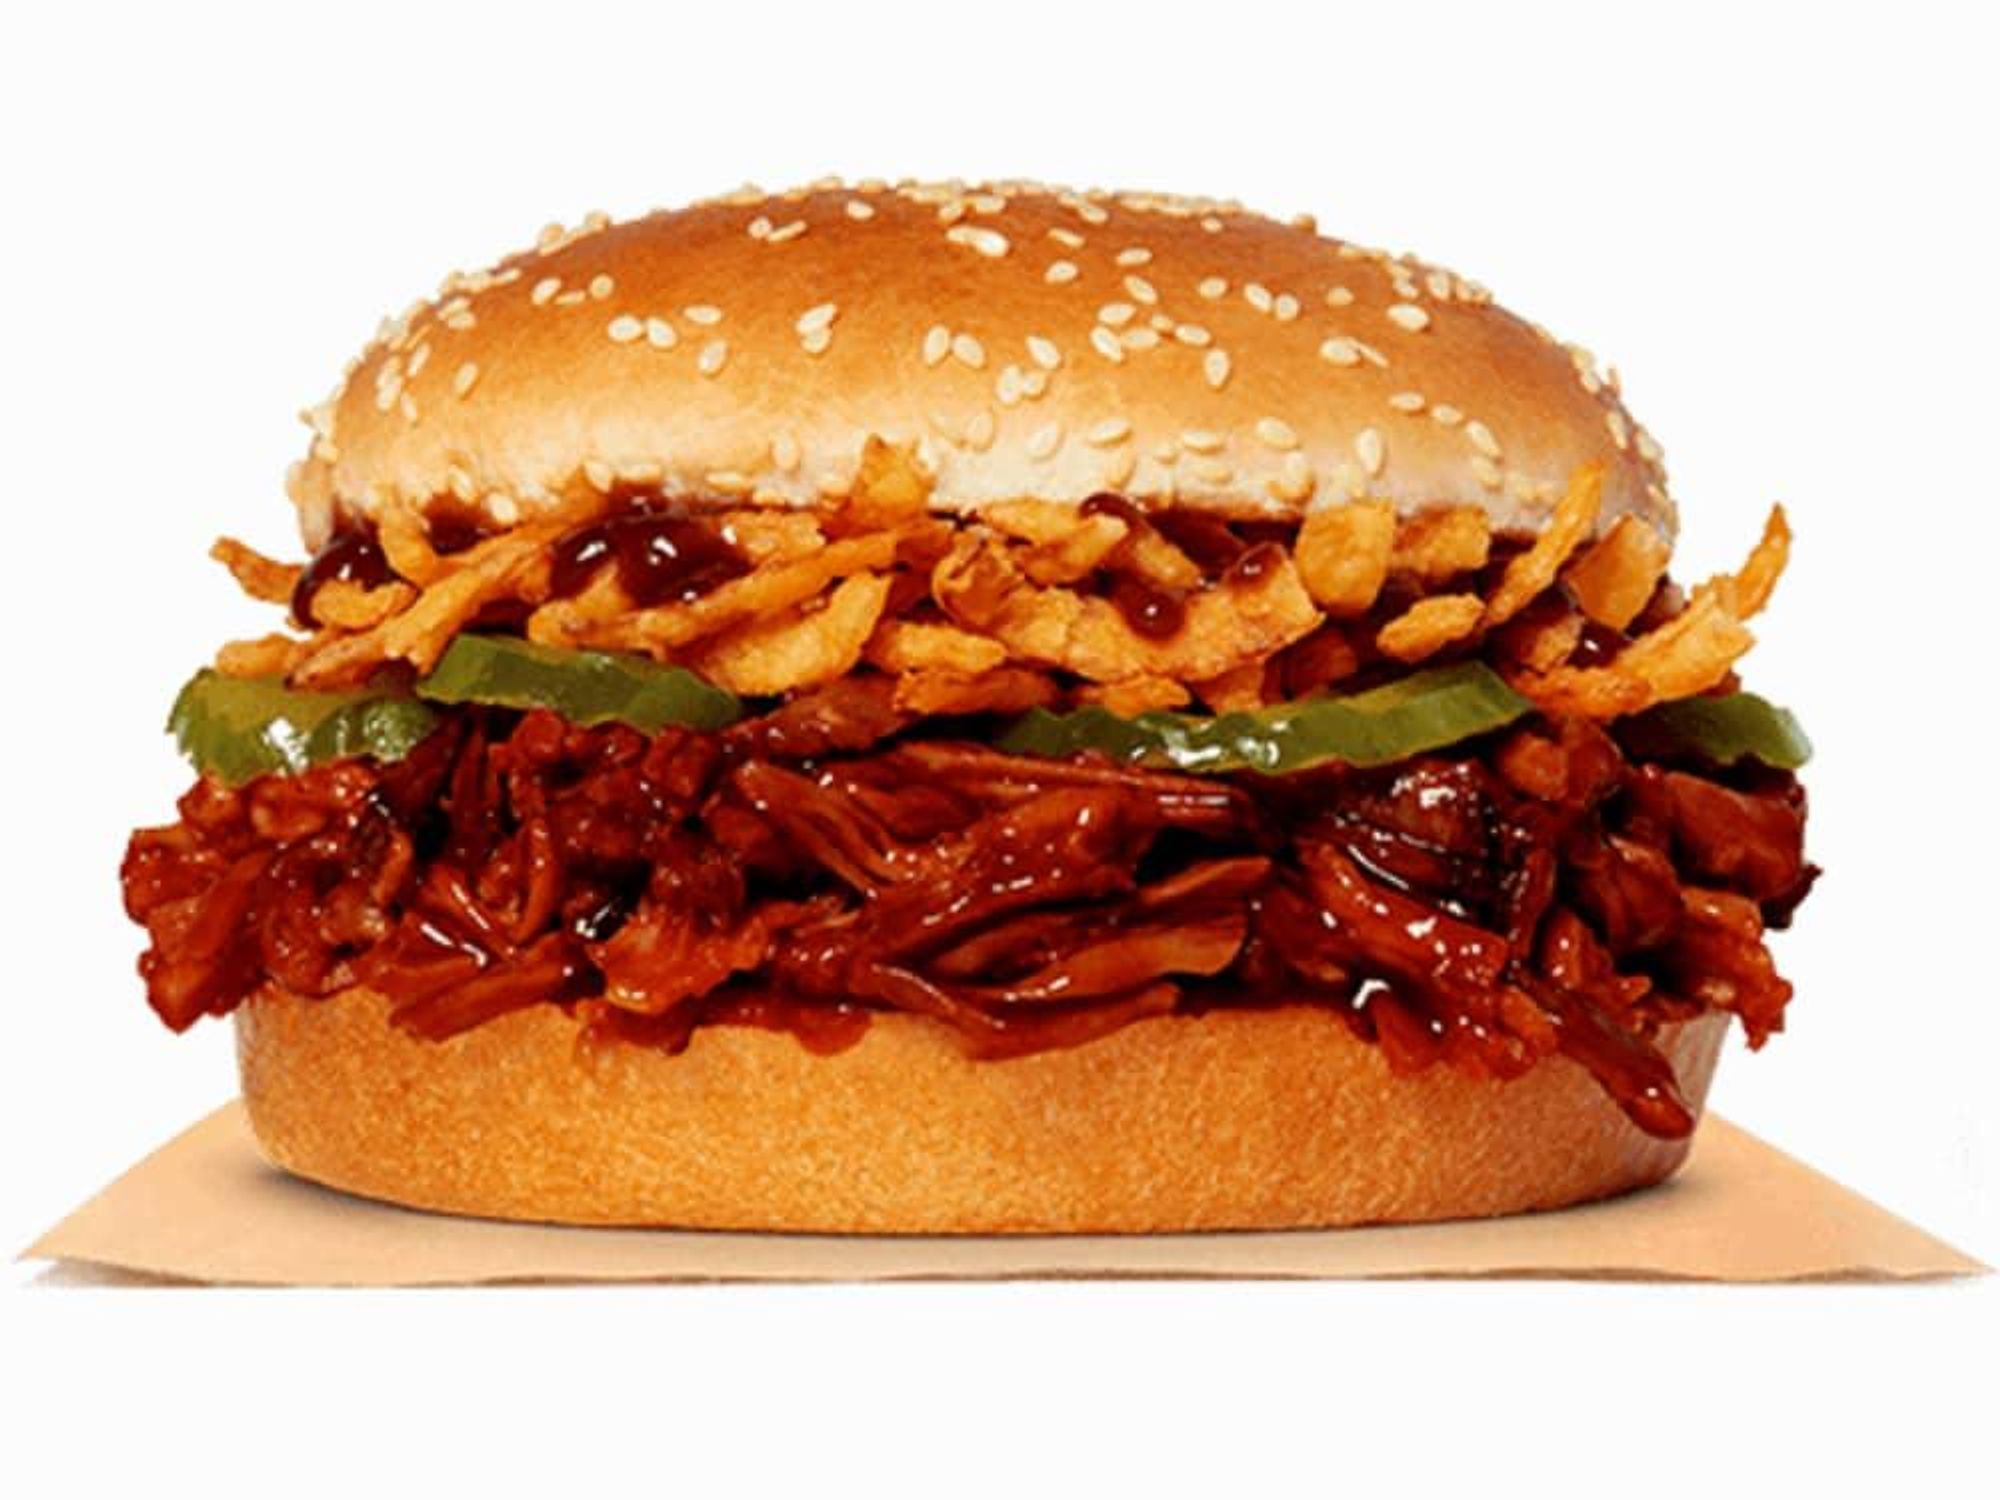 Drive-thru Gourmet - Burger King pulled porks King sandwich